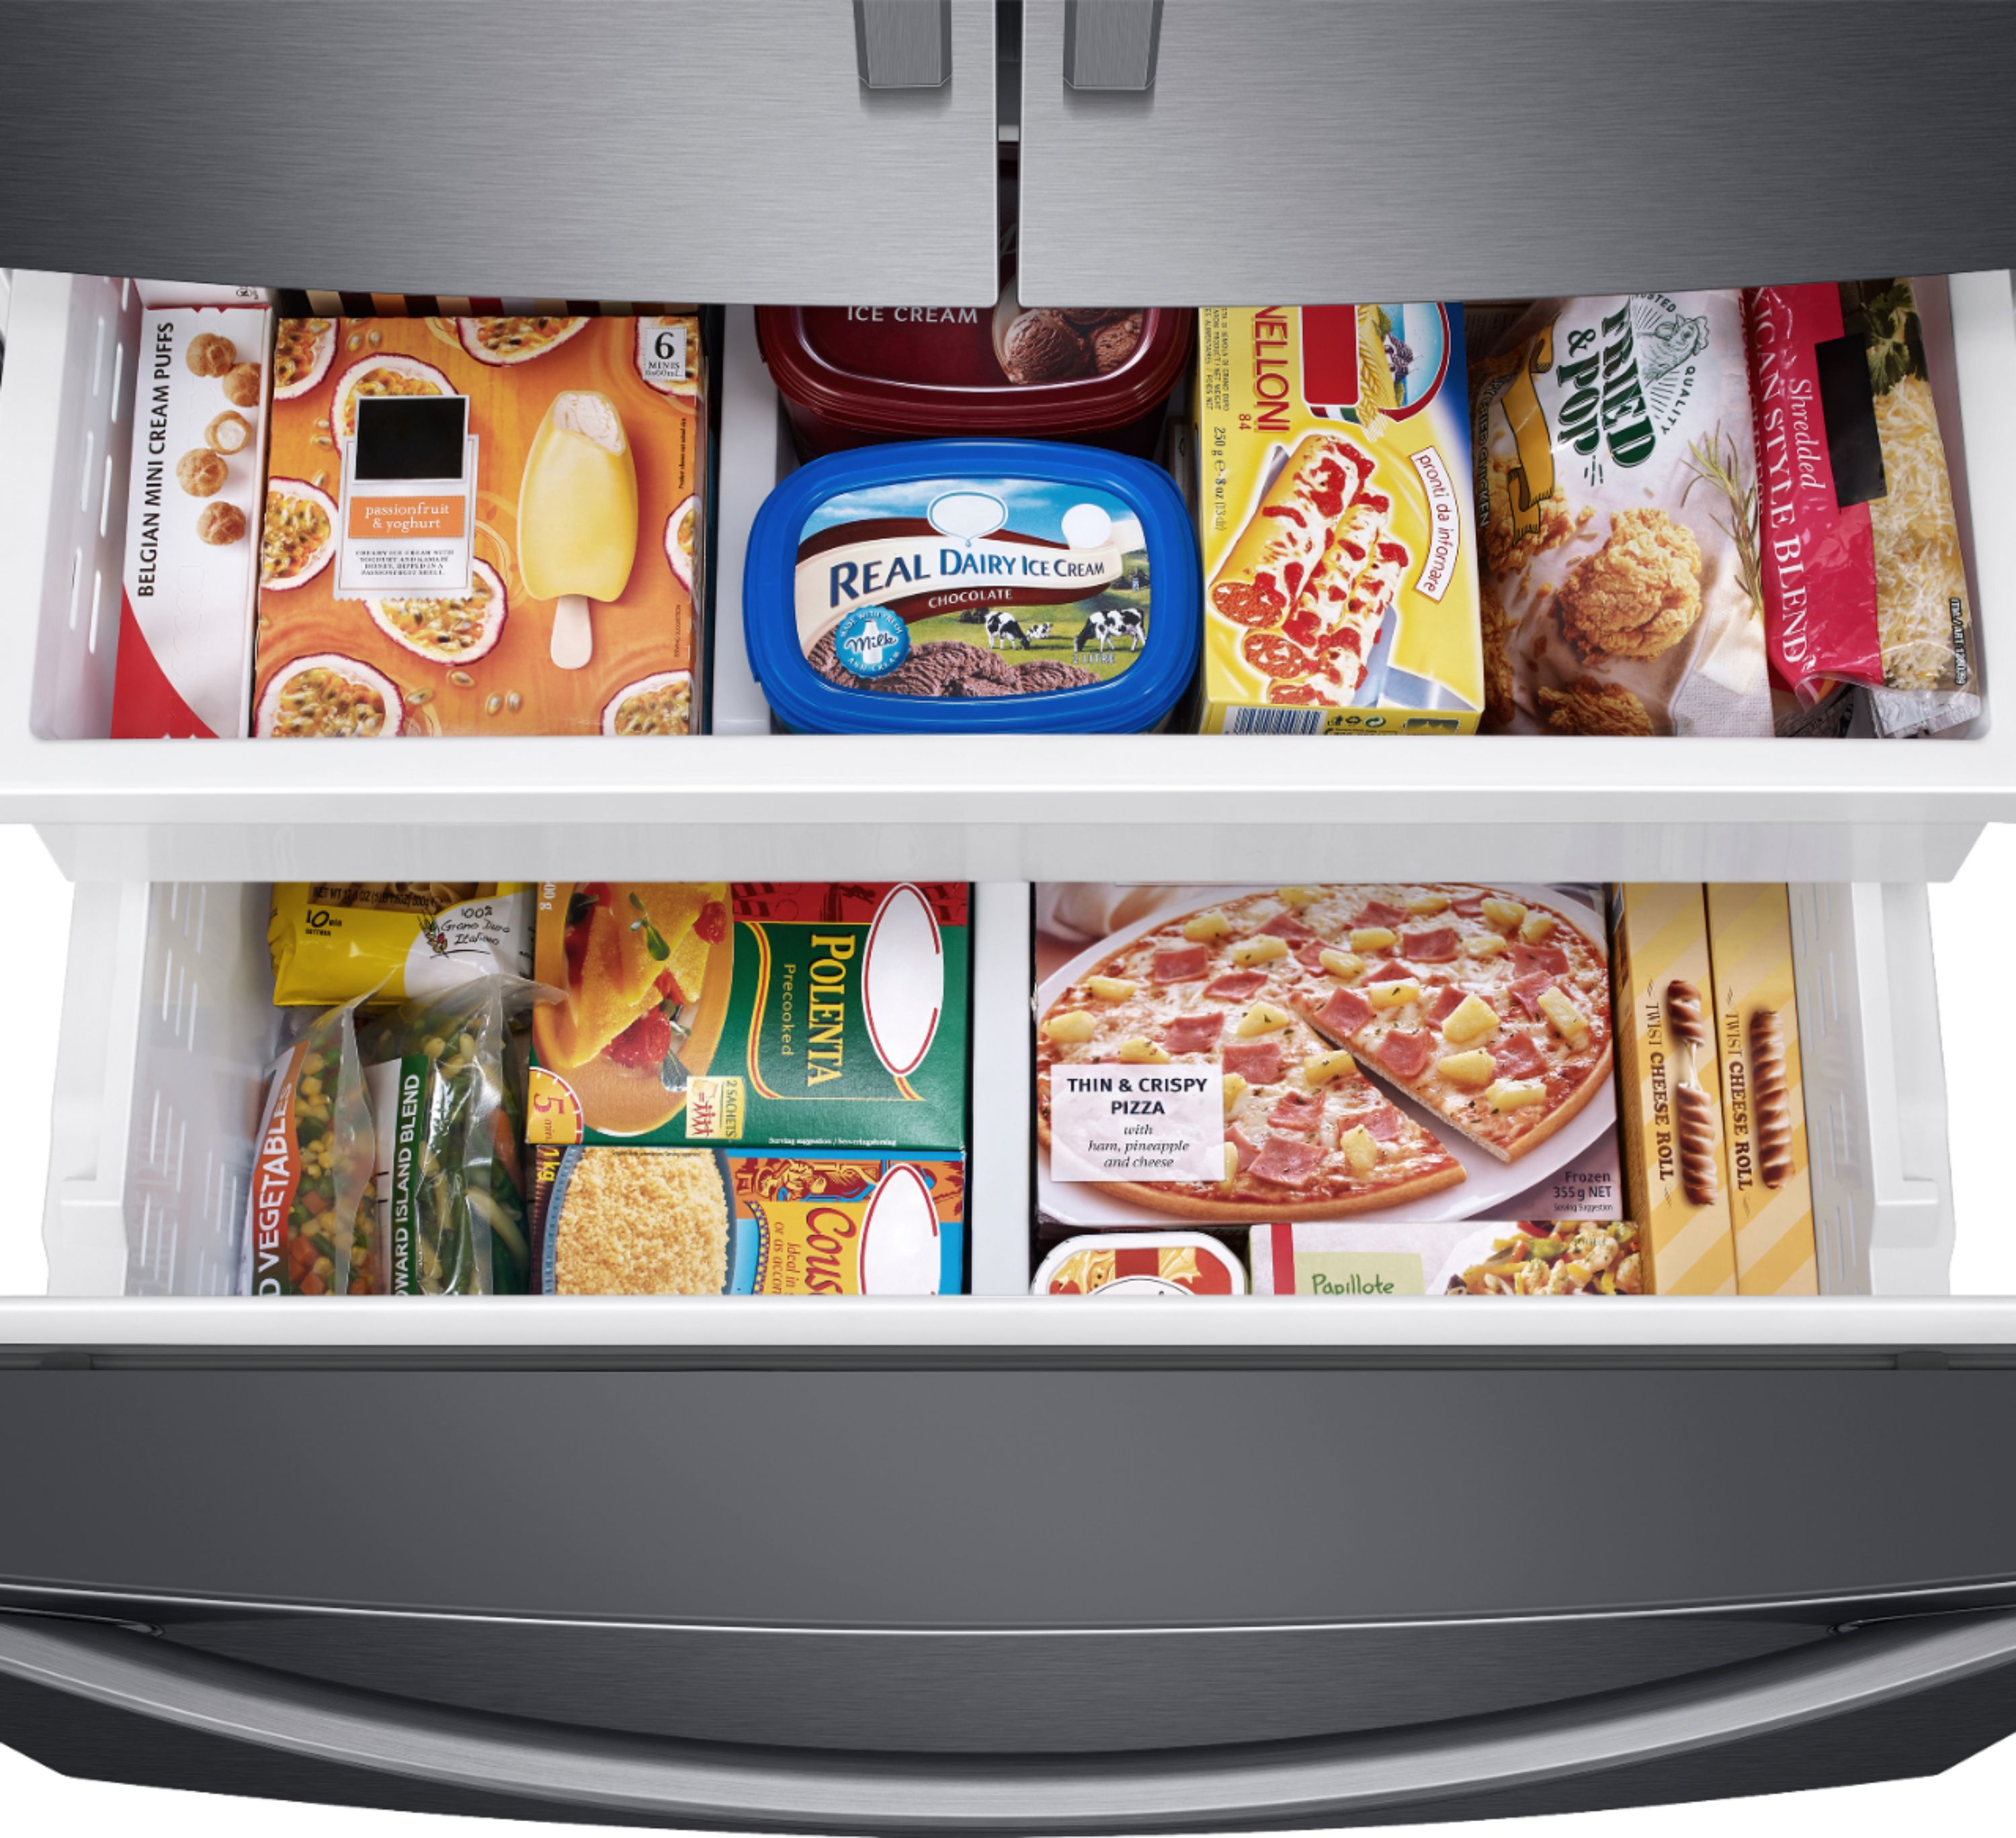 Samsung Refrigerators - French Door External 27 Cu Ft - RF27T5201SS